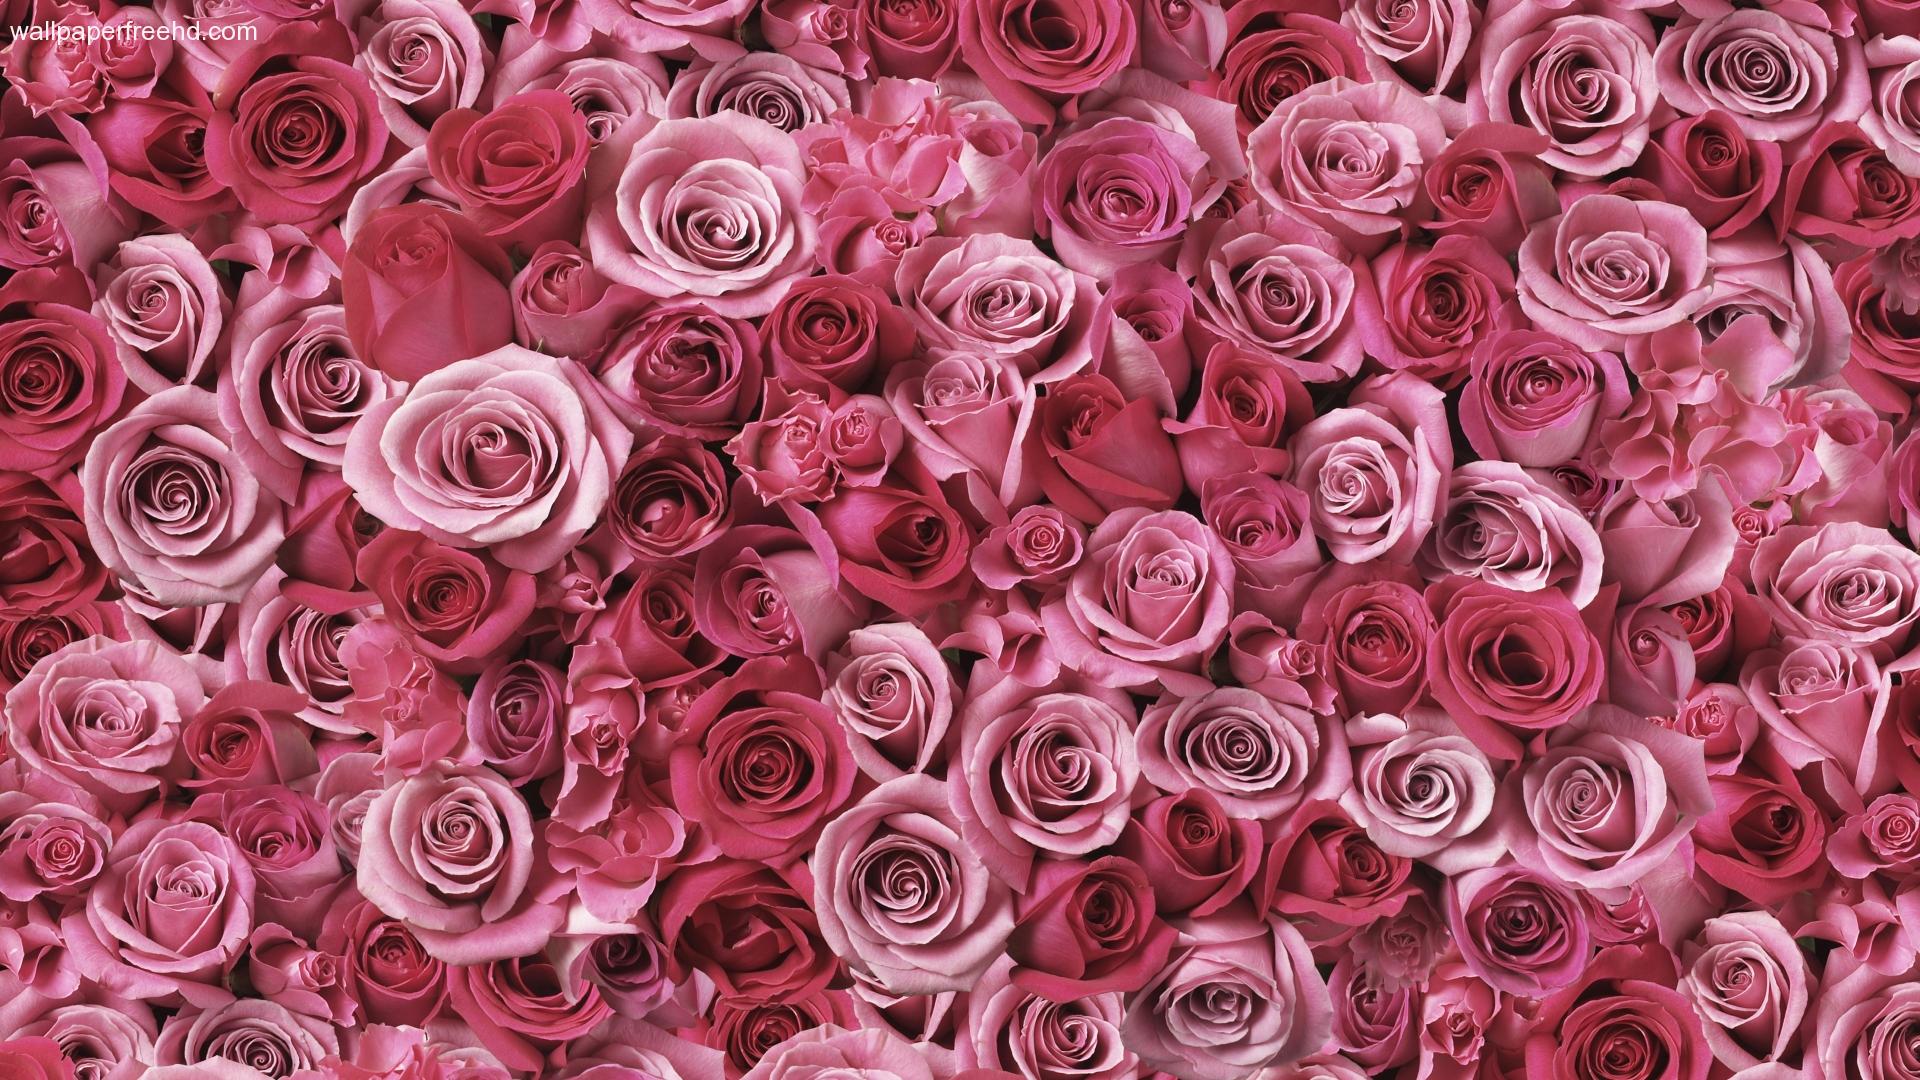 Pink roses free hd desktop backgrounds